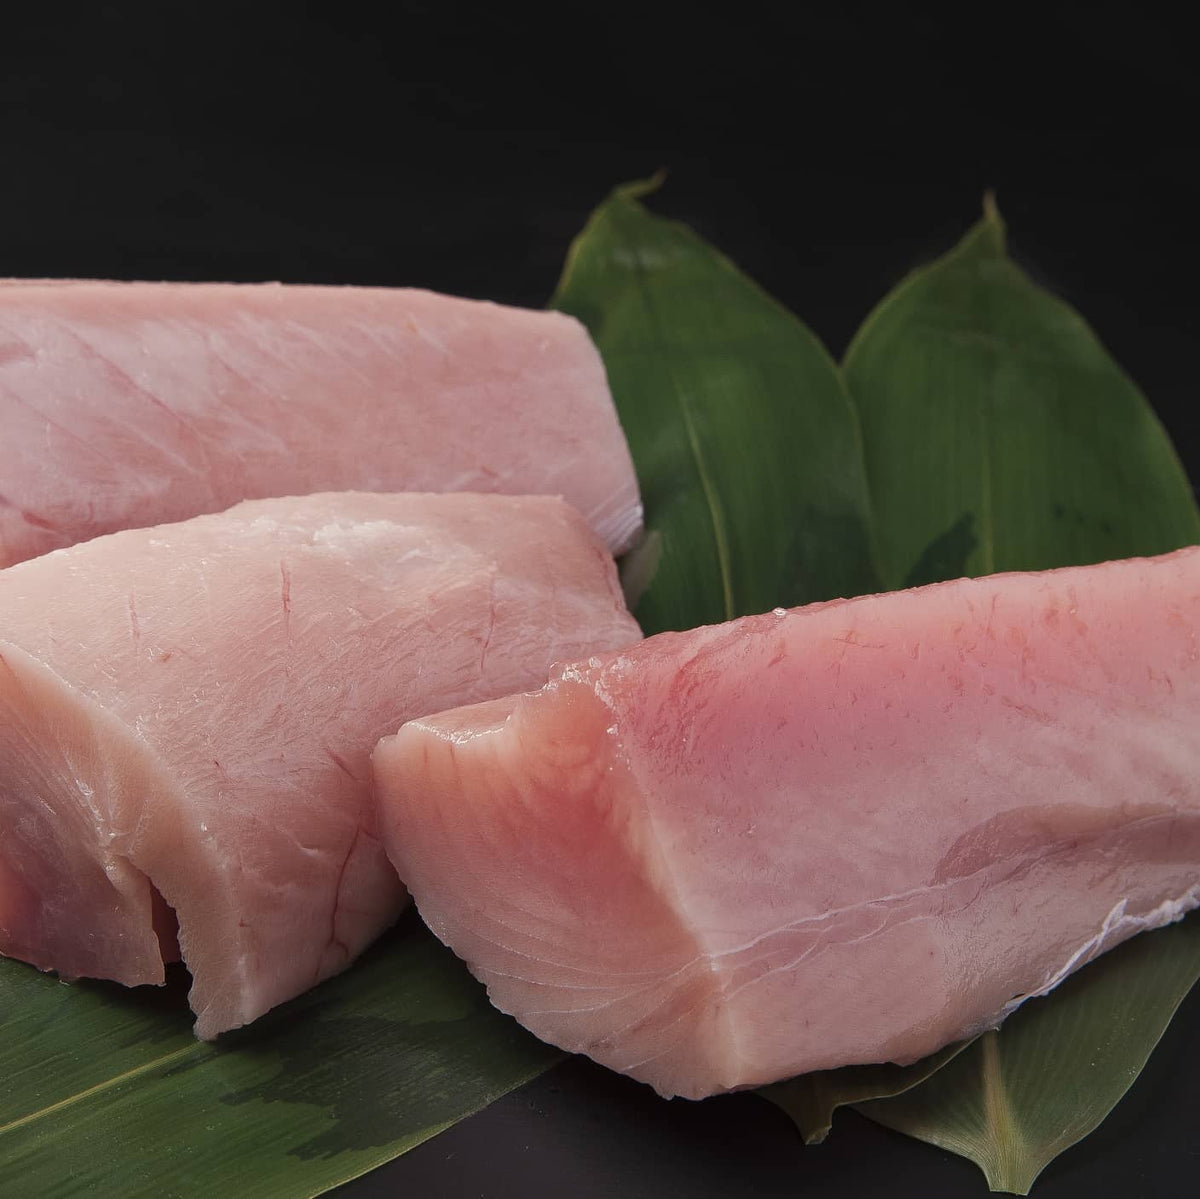 Albacore Tuna Sashimi Grade Loins